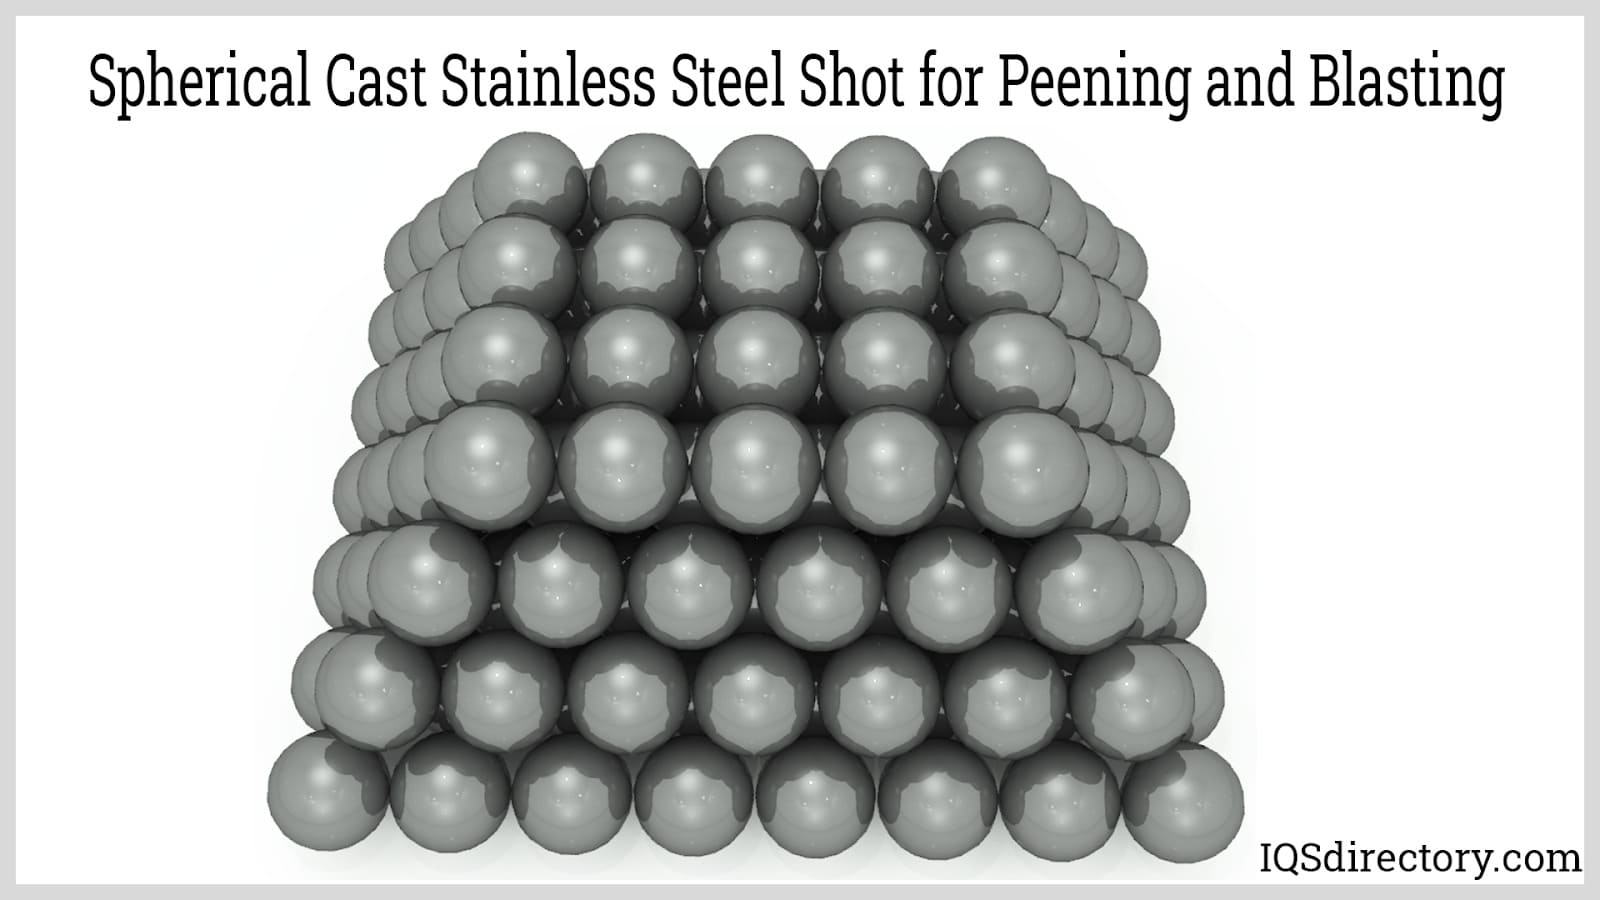 Spherical Cast Stainless Steel Shot for Peening and Blasting